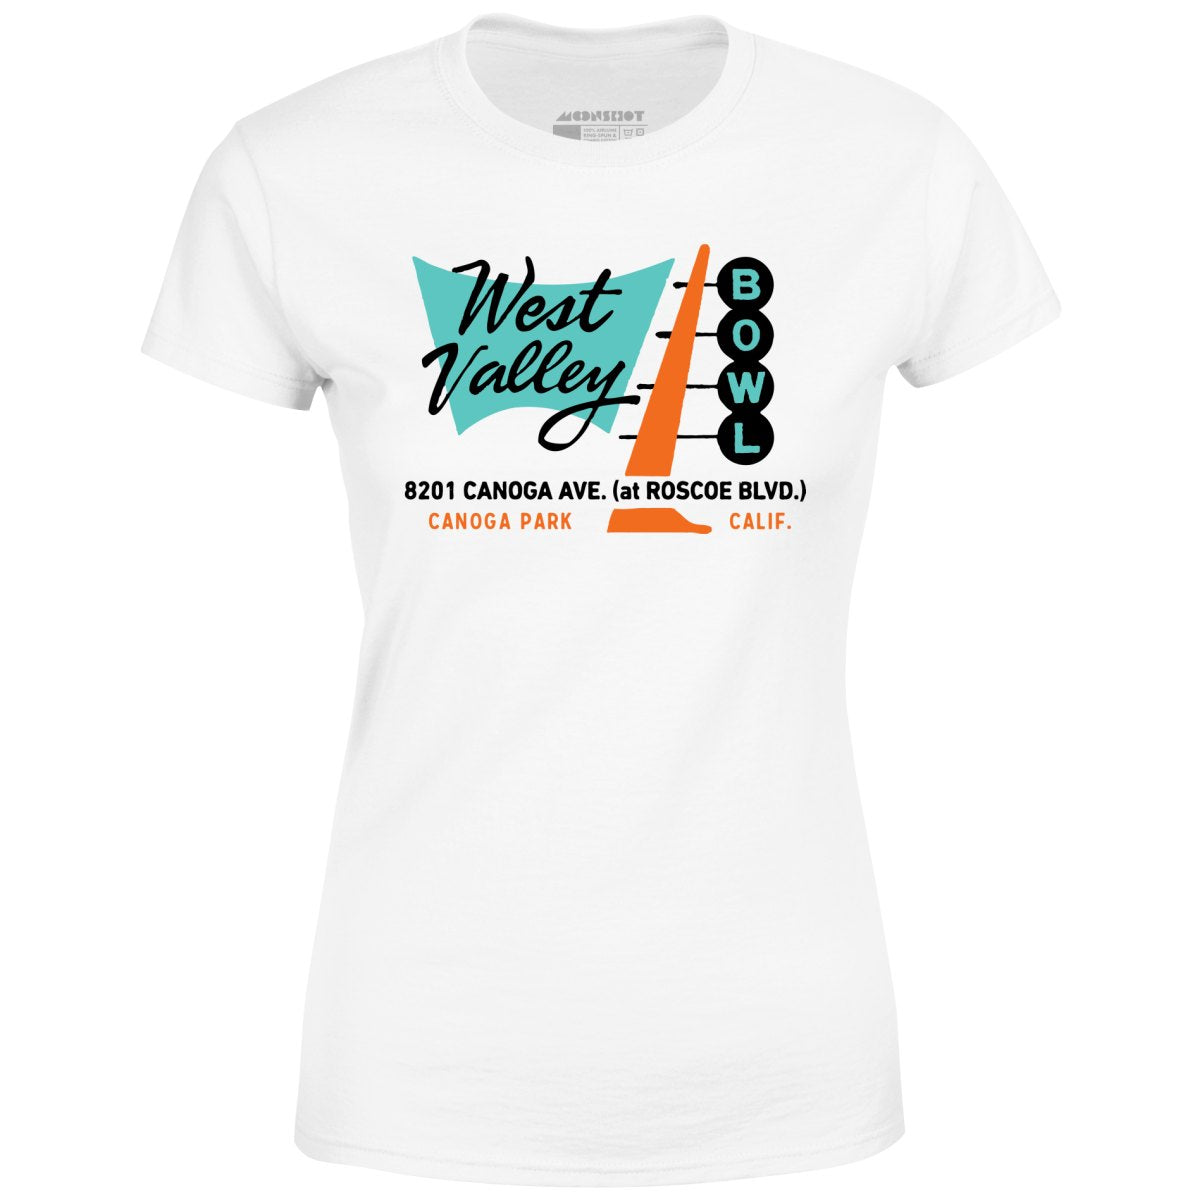 West Valley Bowl - Canoga Park, CA - Vintage Bowling Alley - Women's T-Shirt